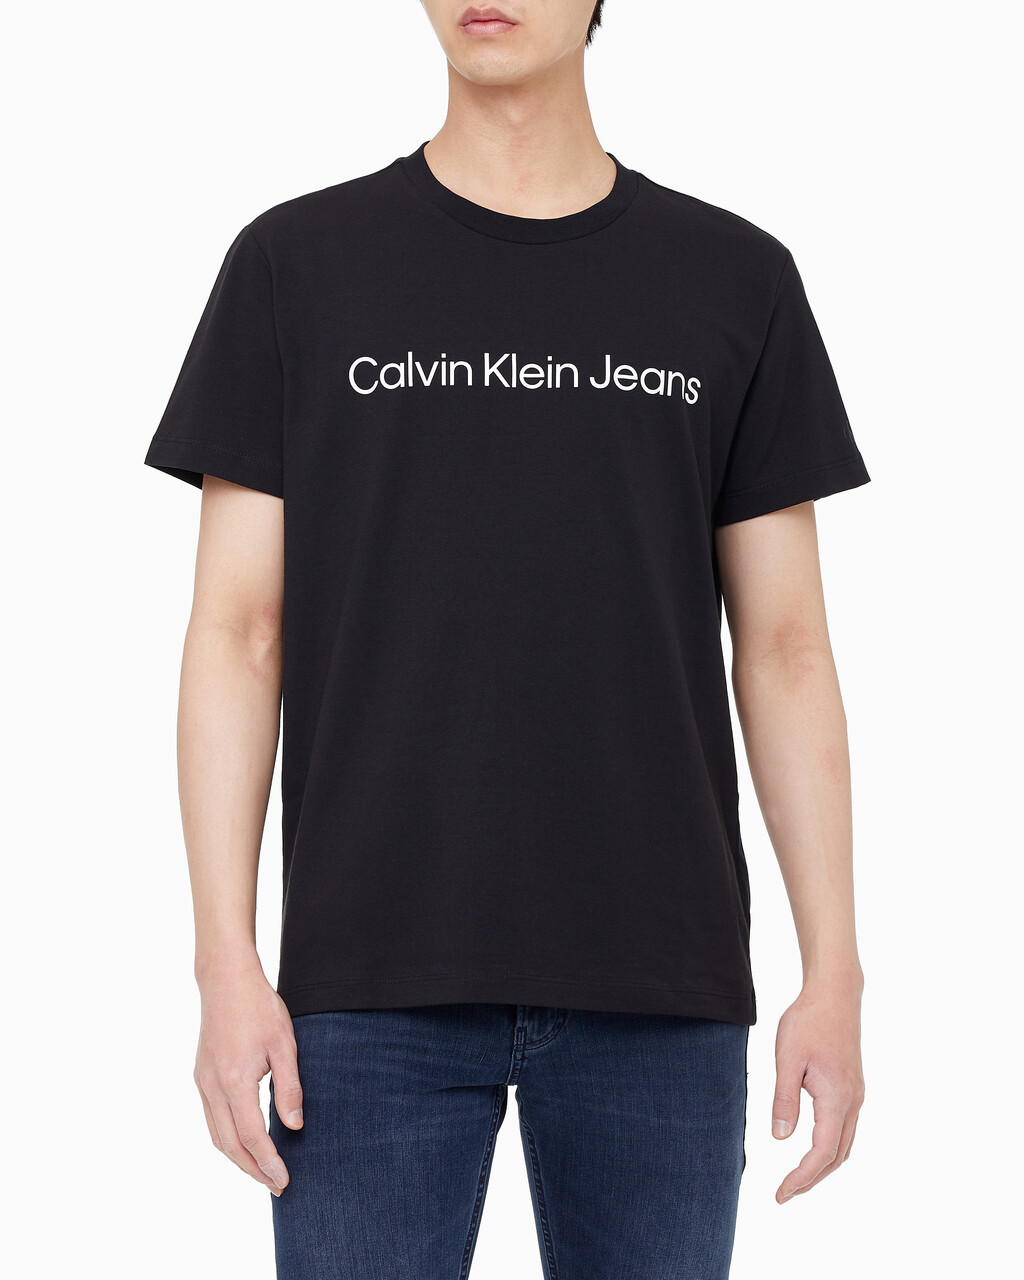 Buy 남성 레귤러핏 인스티튜셔널 로고 스트레치 반팔 티셔츠 in color CK BLACK